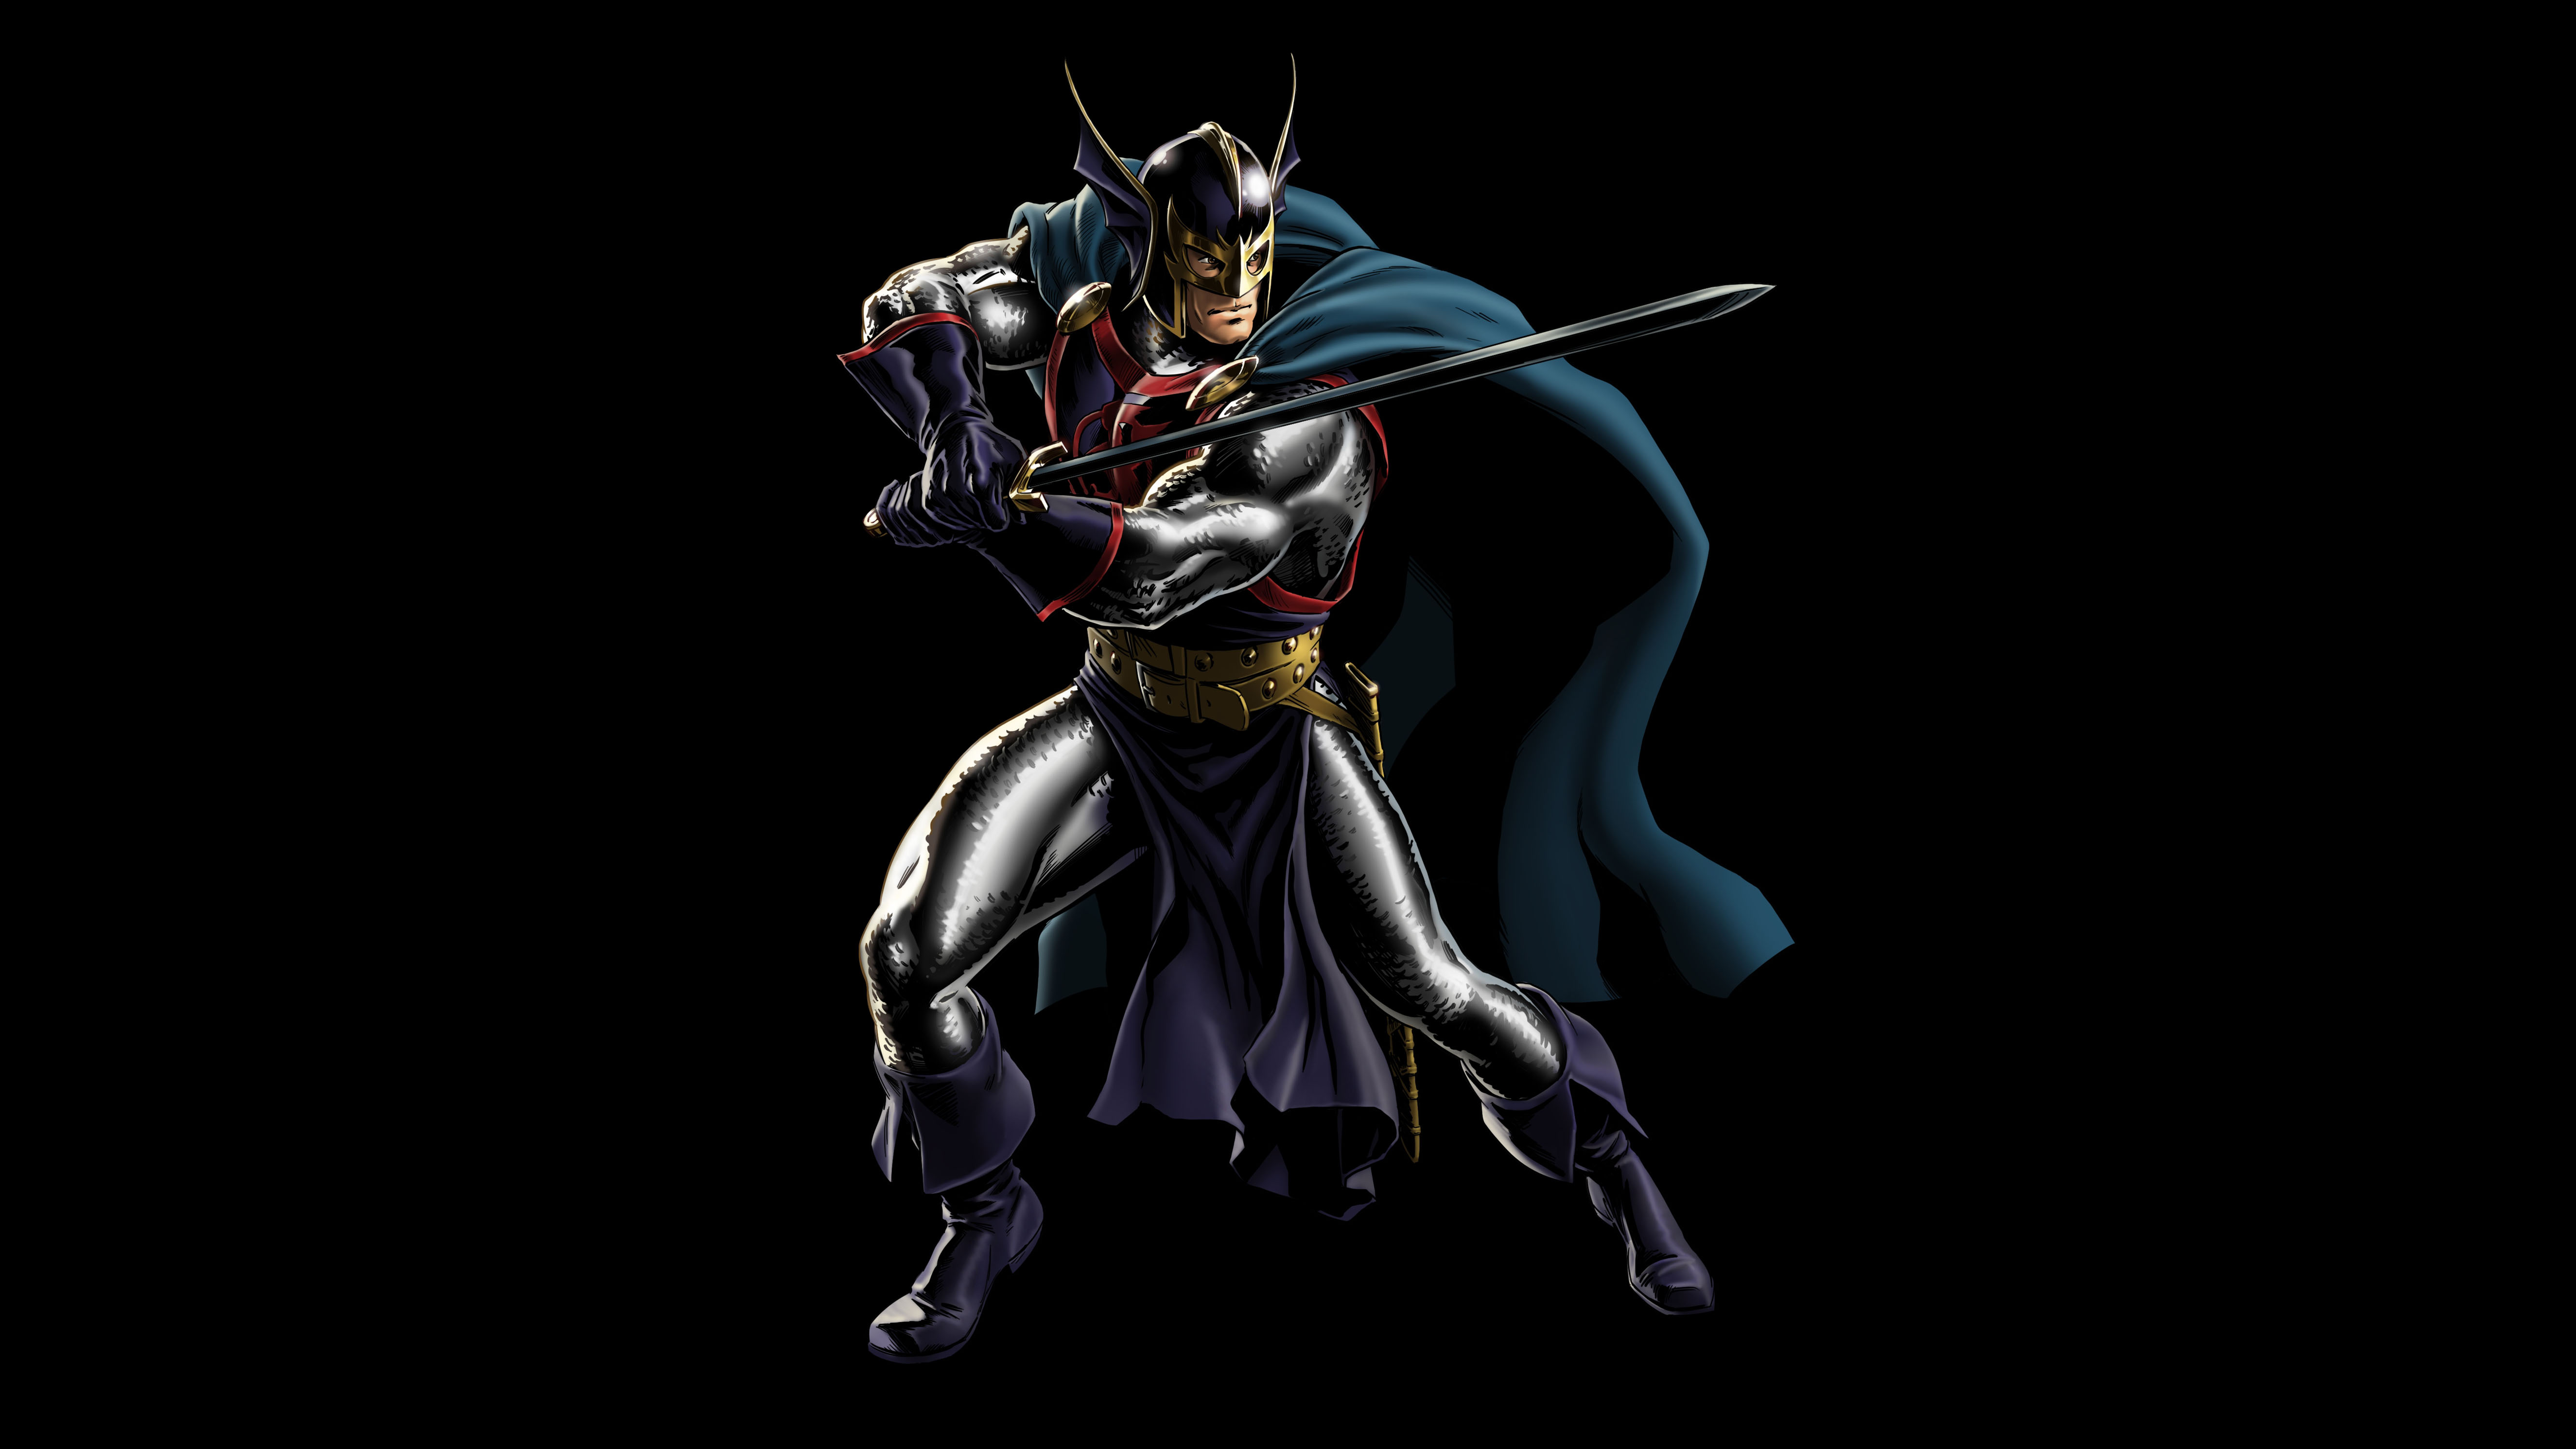 Dark Knight Warrior 4K wallpaper download